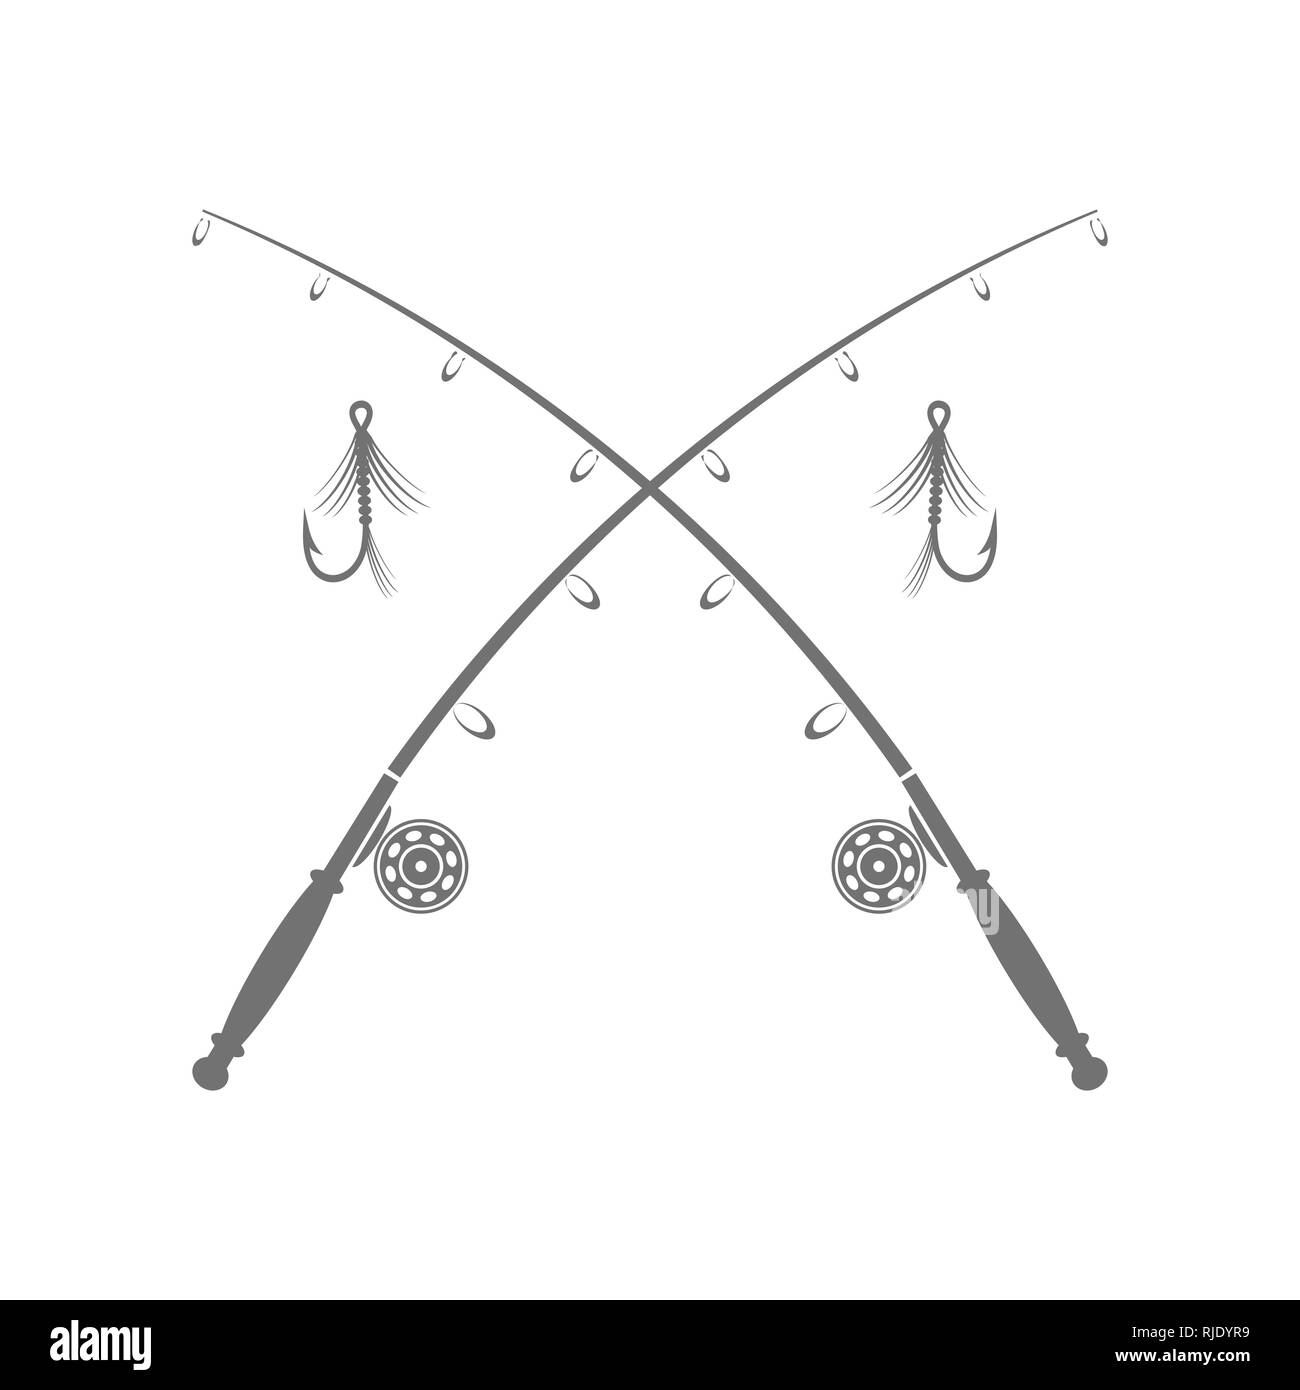 https://c8.alamy.com/comp/RJDYR9/fishing-rod-silhouette-with-fishing-hook-RJDYR9.jpg